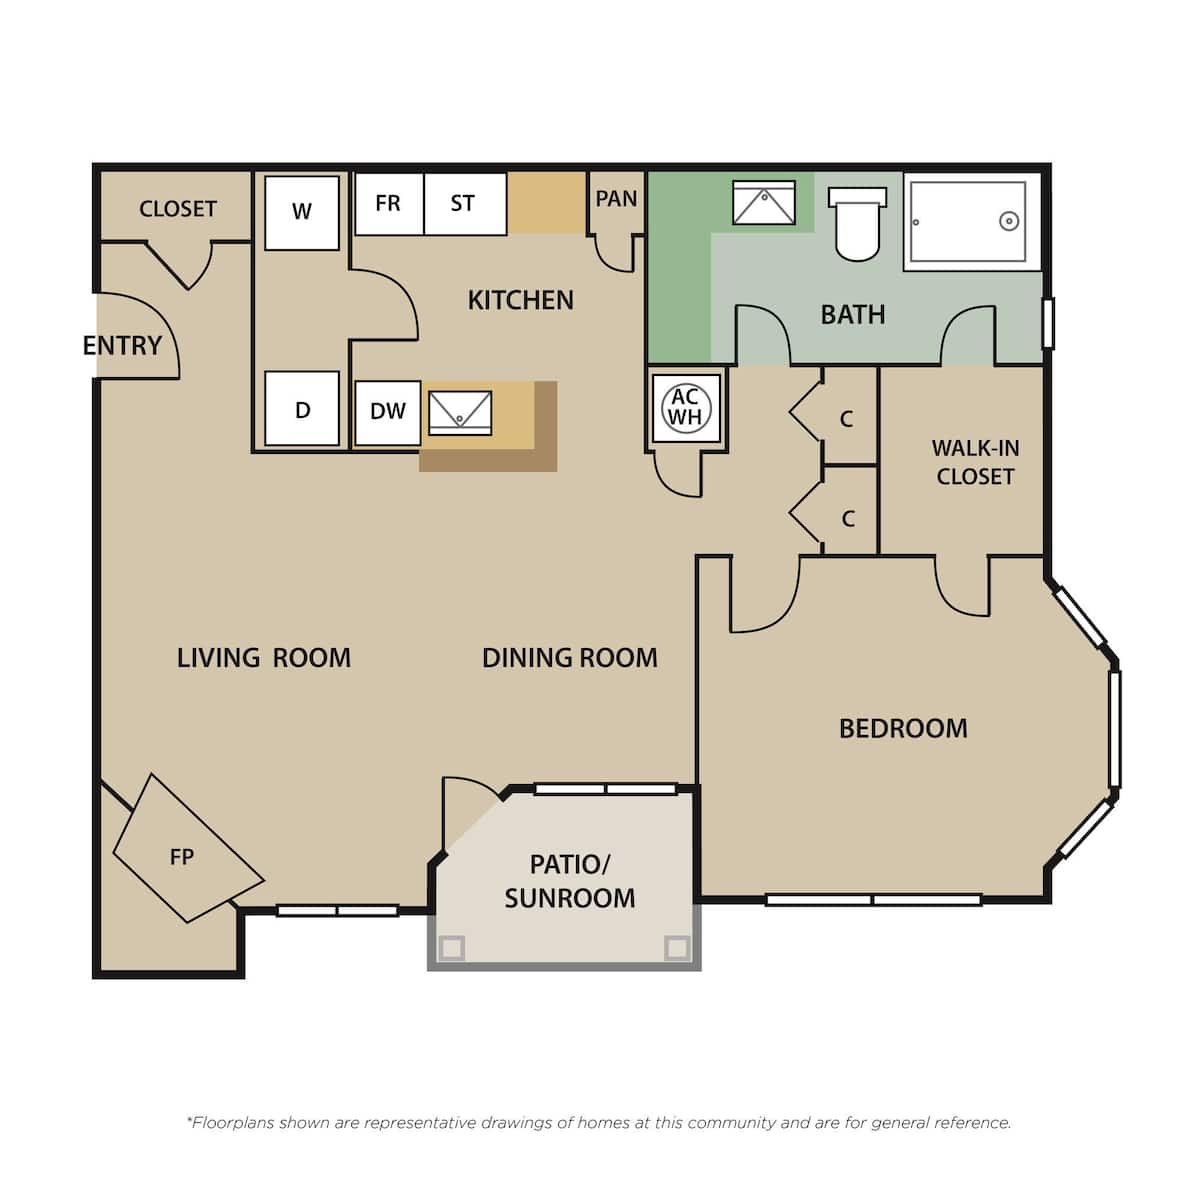 Floorplan diagram for GROVE A8, showing 1 bedroom